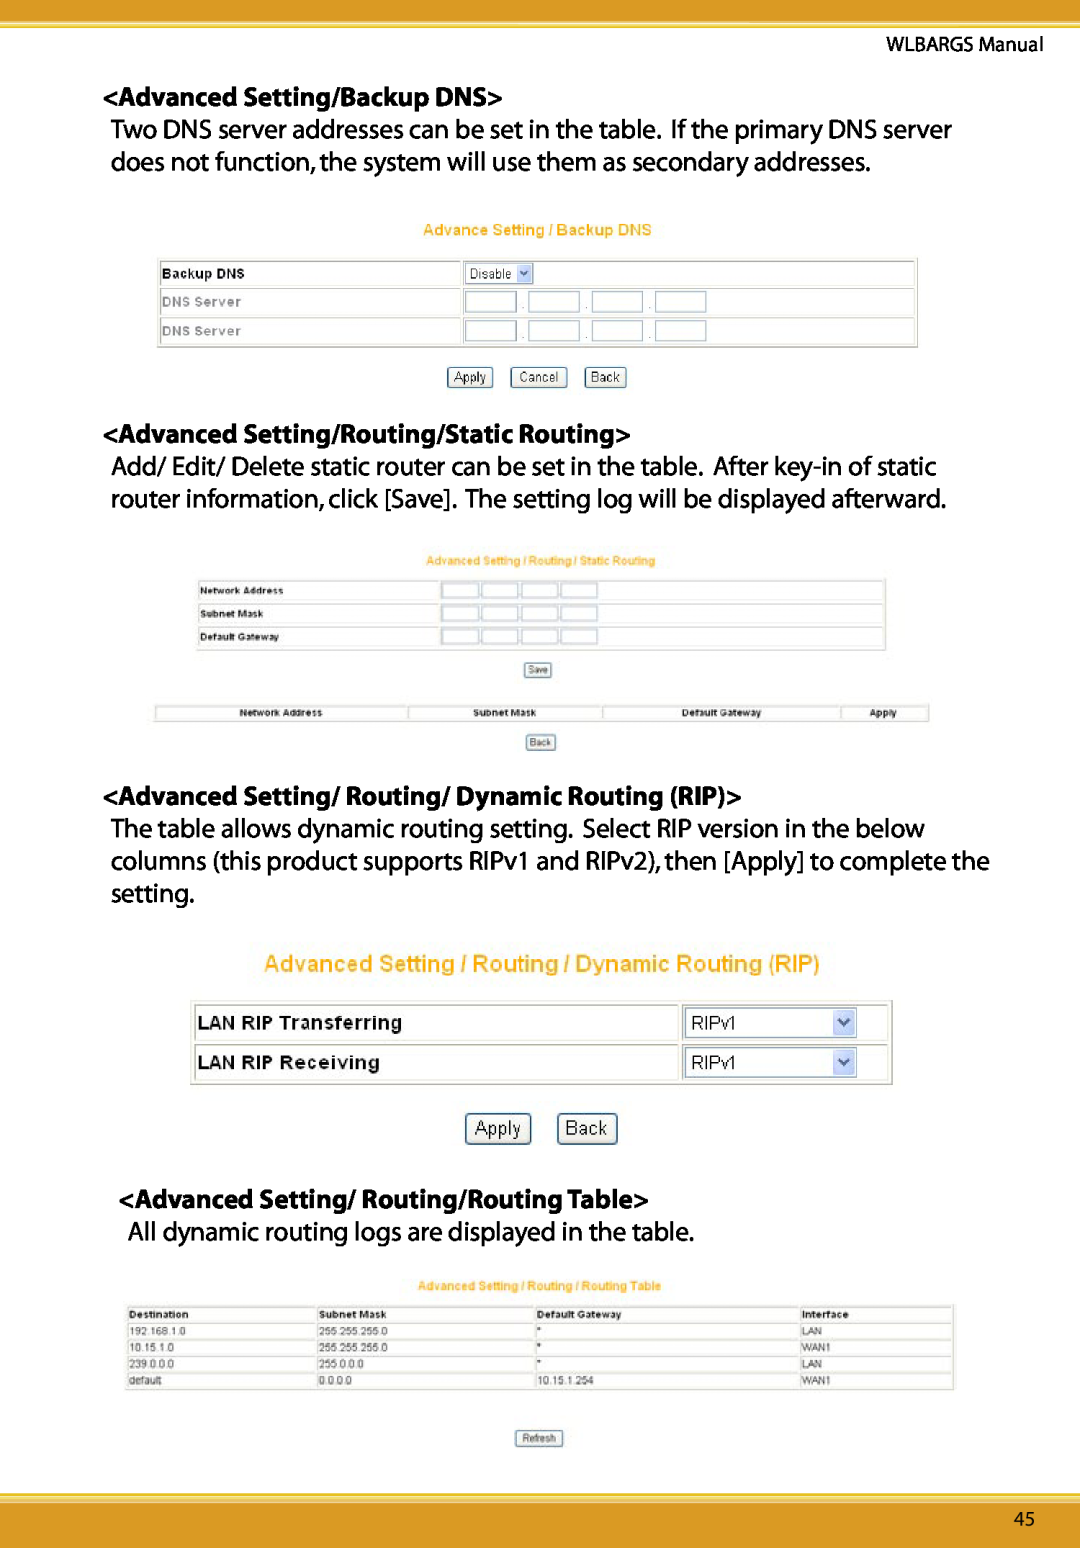 Allied Telesis CG-WLBARGS manual Advanced Setting/Backup DNS, Advanced Setting/Routing/Static Routing 